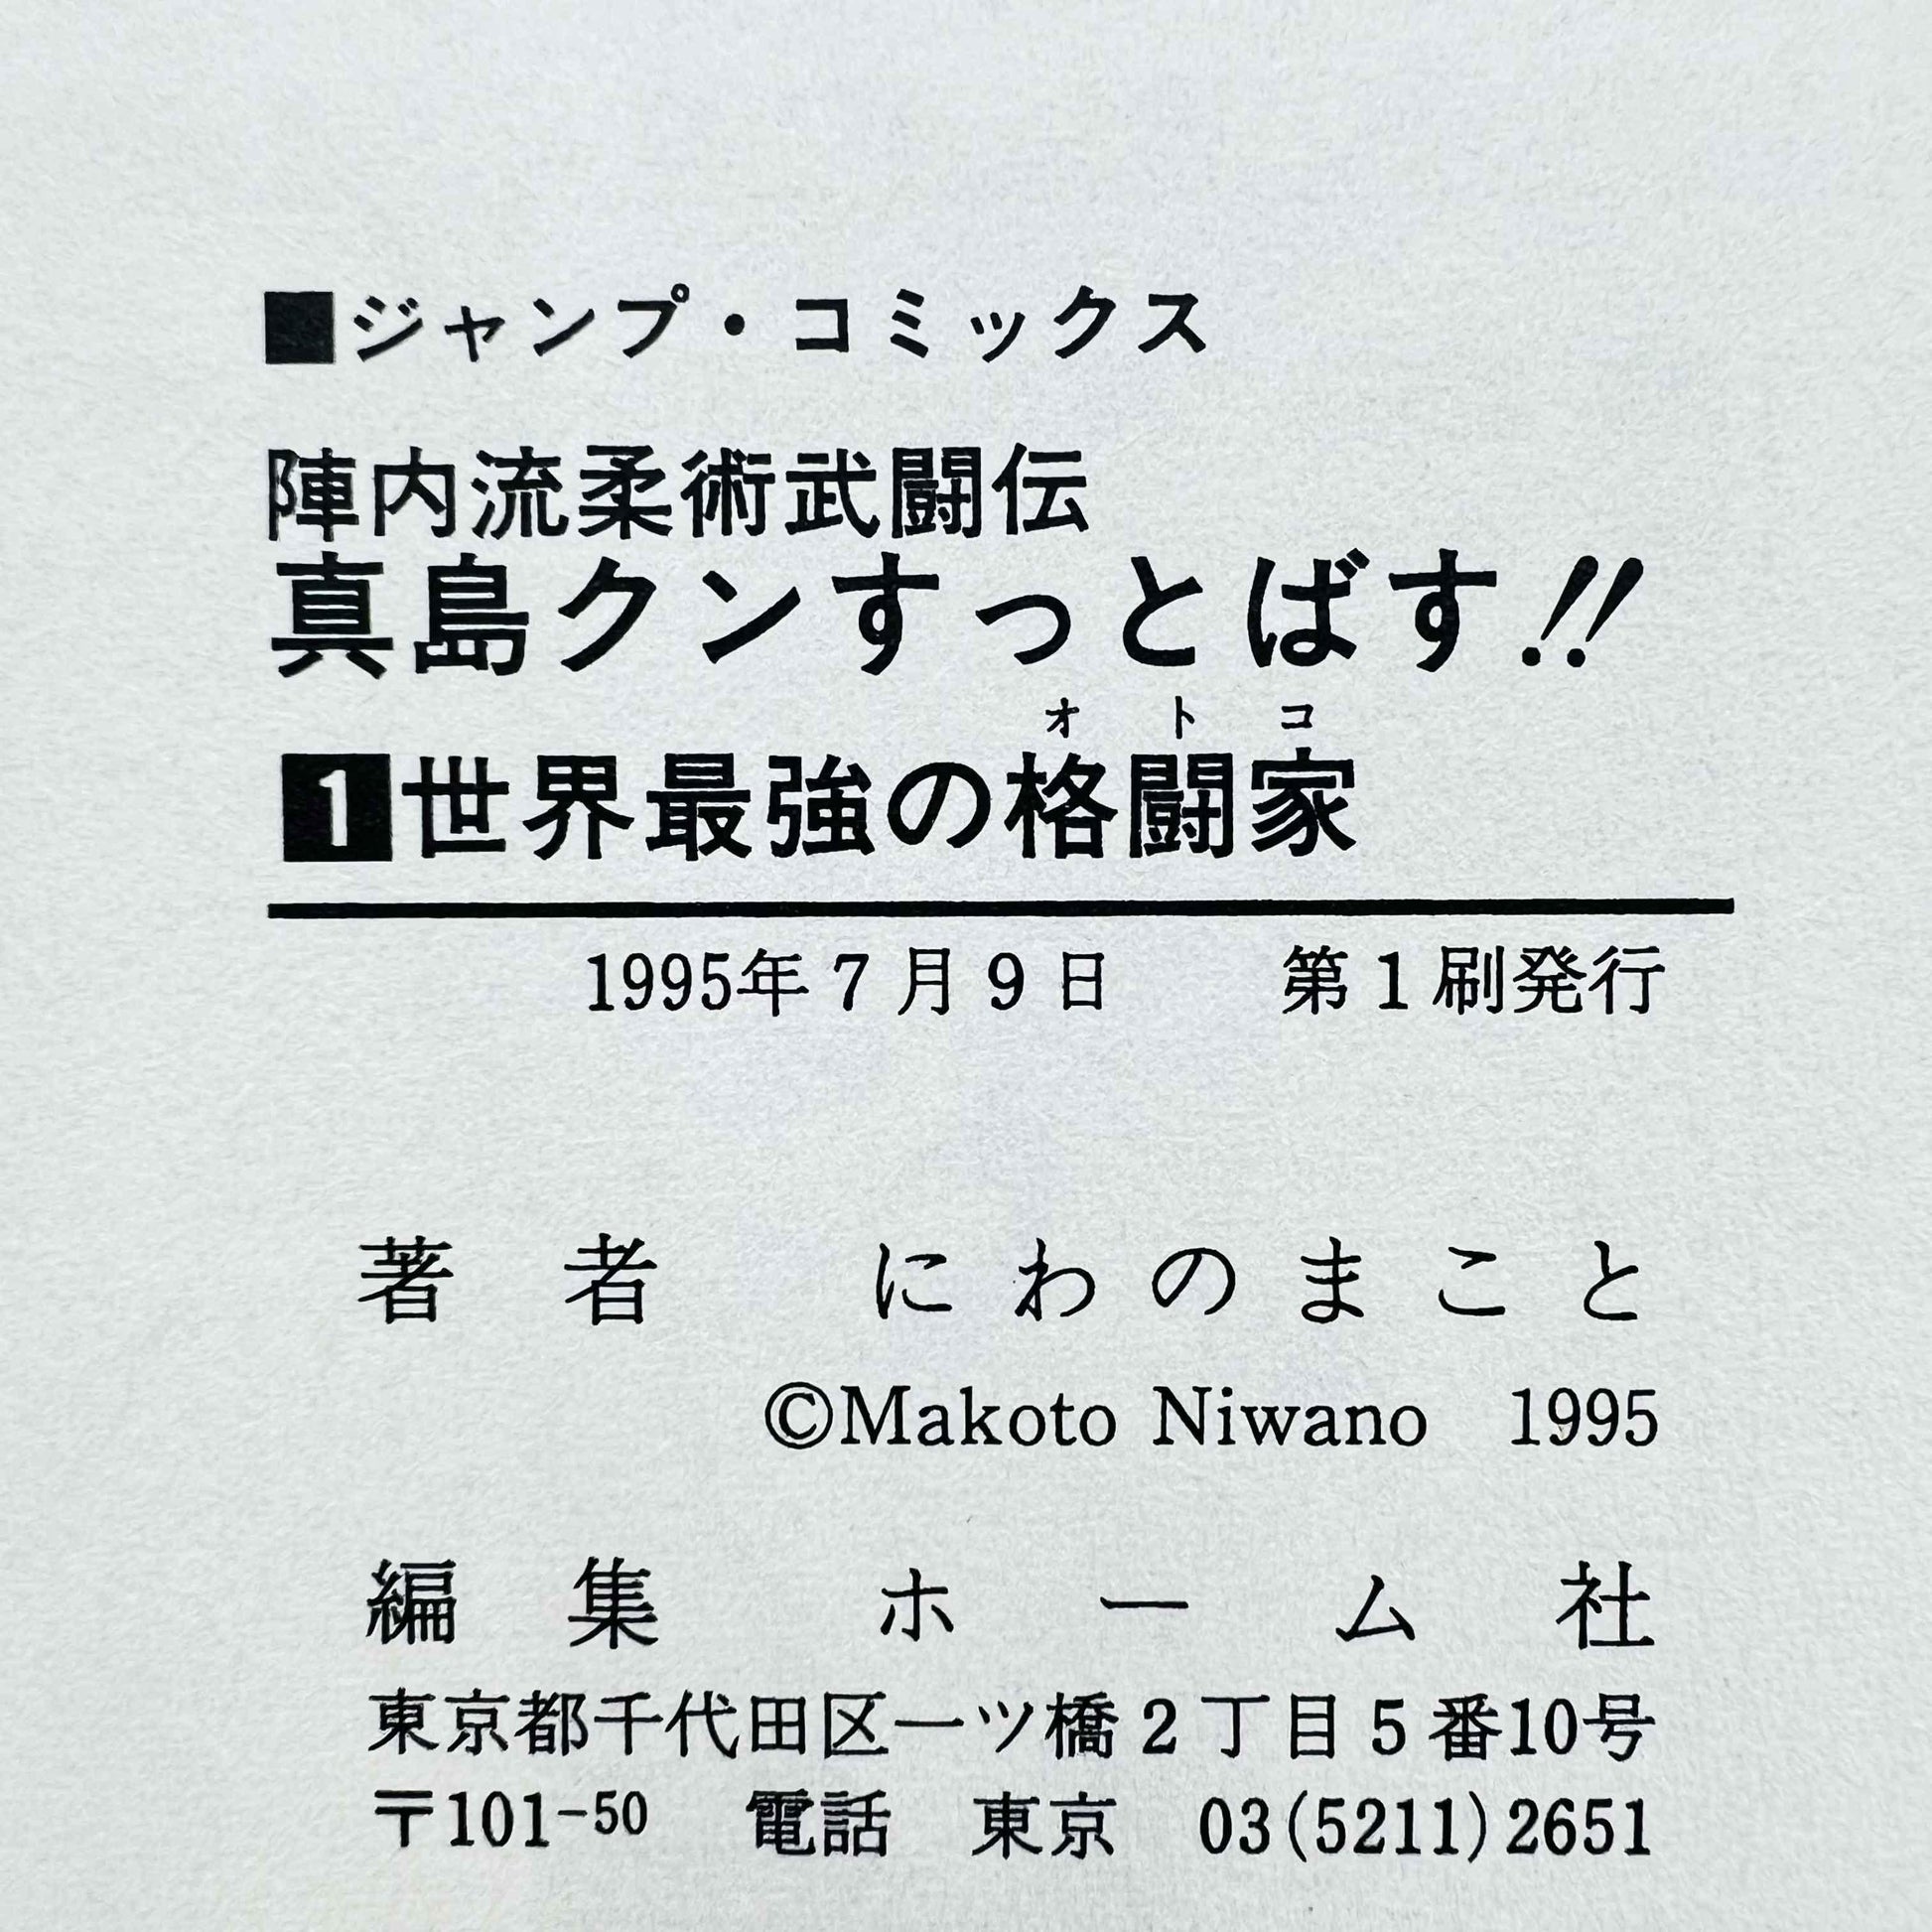 Majima-kun Suttobasu - Volume 01 - 1stPrint.net - 1st First Print Edition Manga Store - M-MAJIMAKUN-01-001